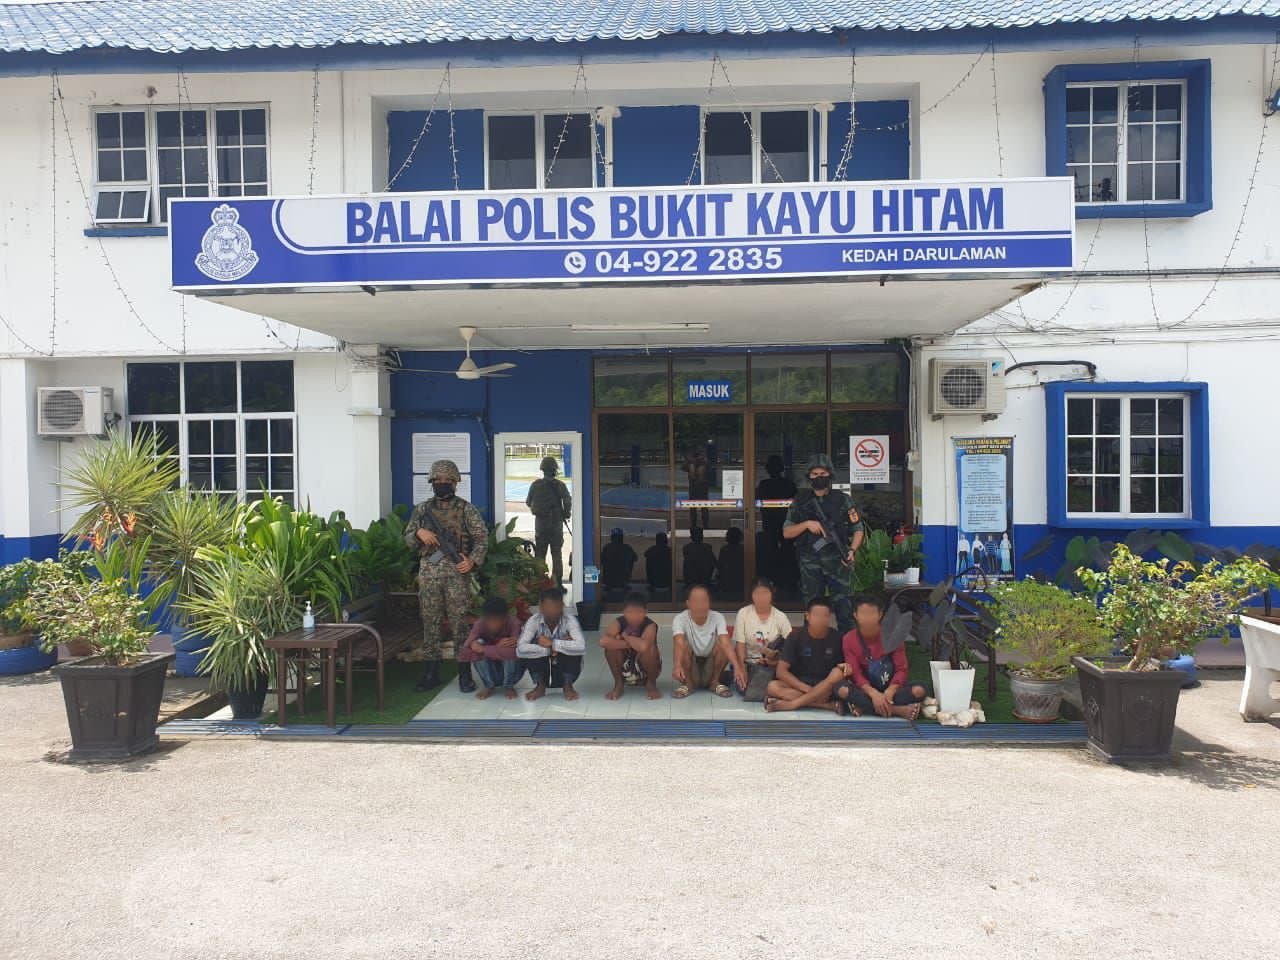 Semua pendatang asing yang ditahan itu dserahkan kepada Balai Polis Bukit Kayu Hitam. 